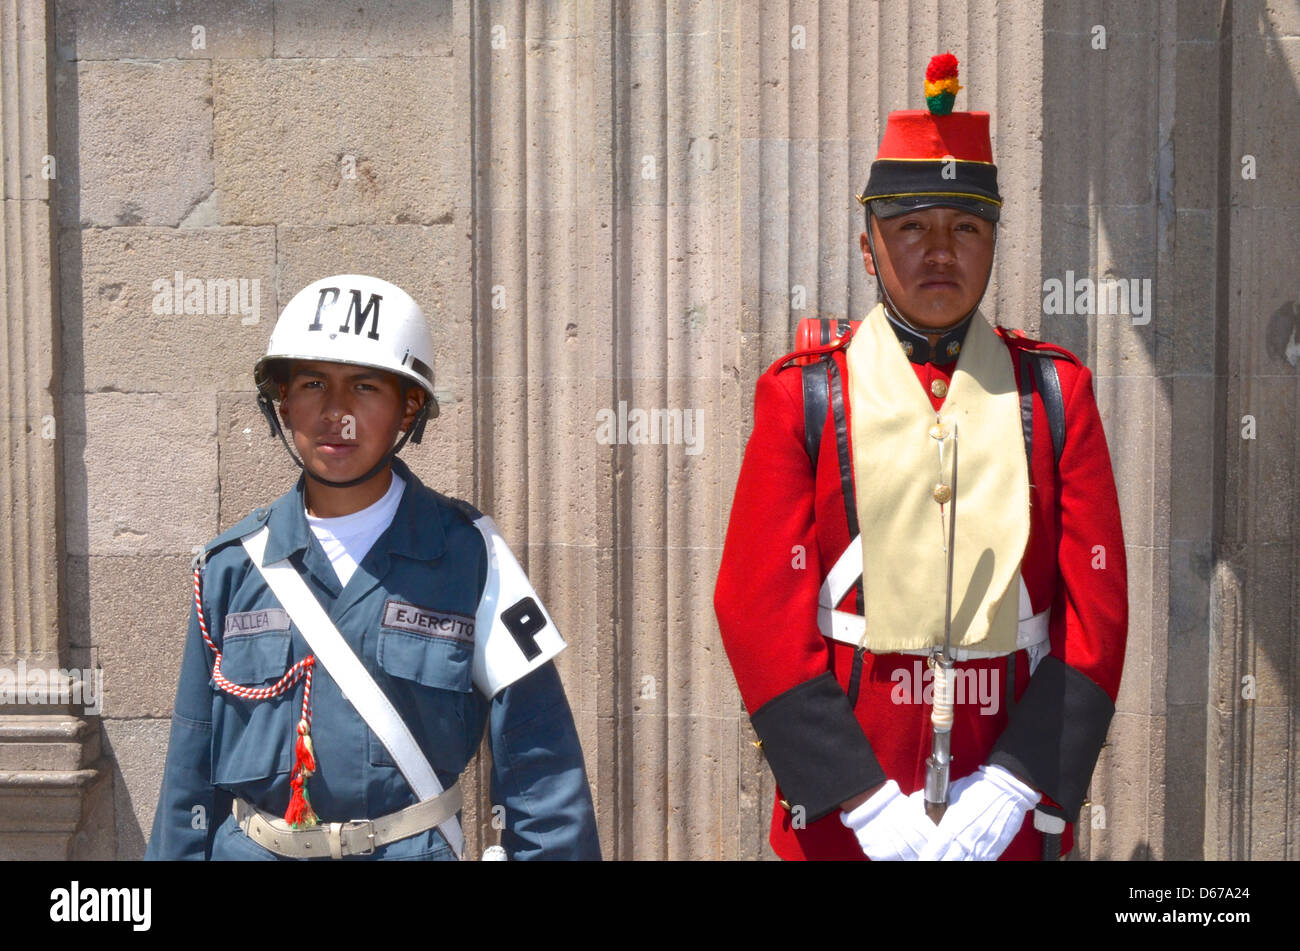 Policia boliviana en uniforme fotografías e imágenes de alta resolución -  Alamy